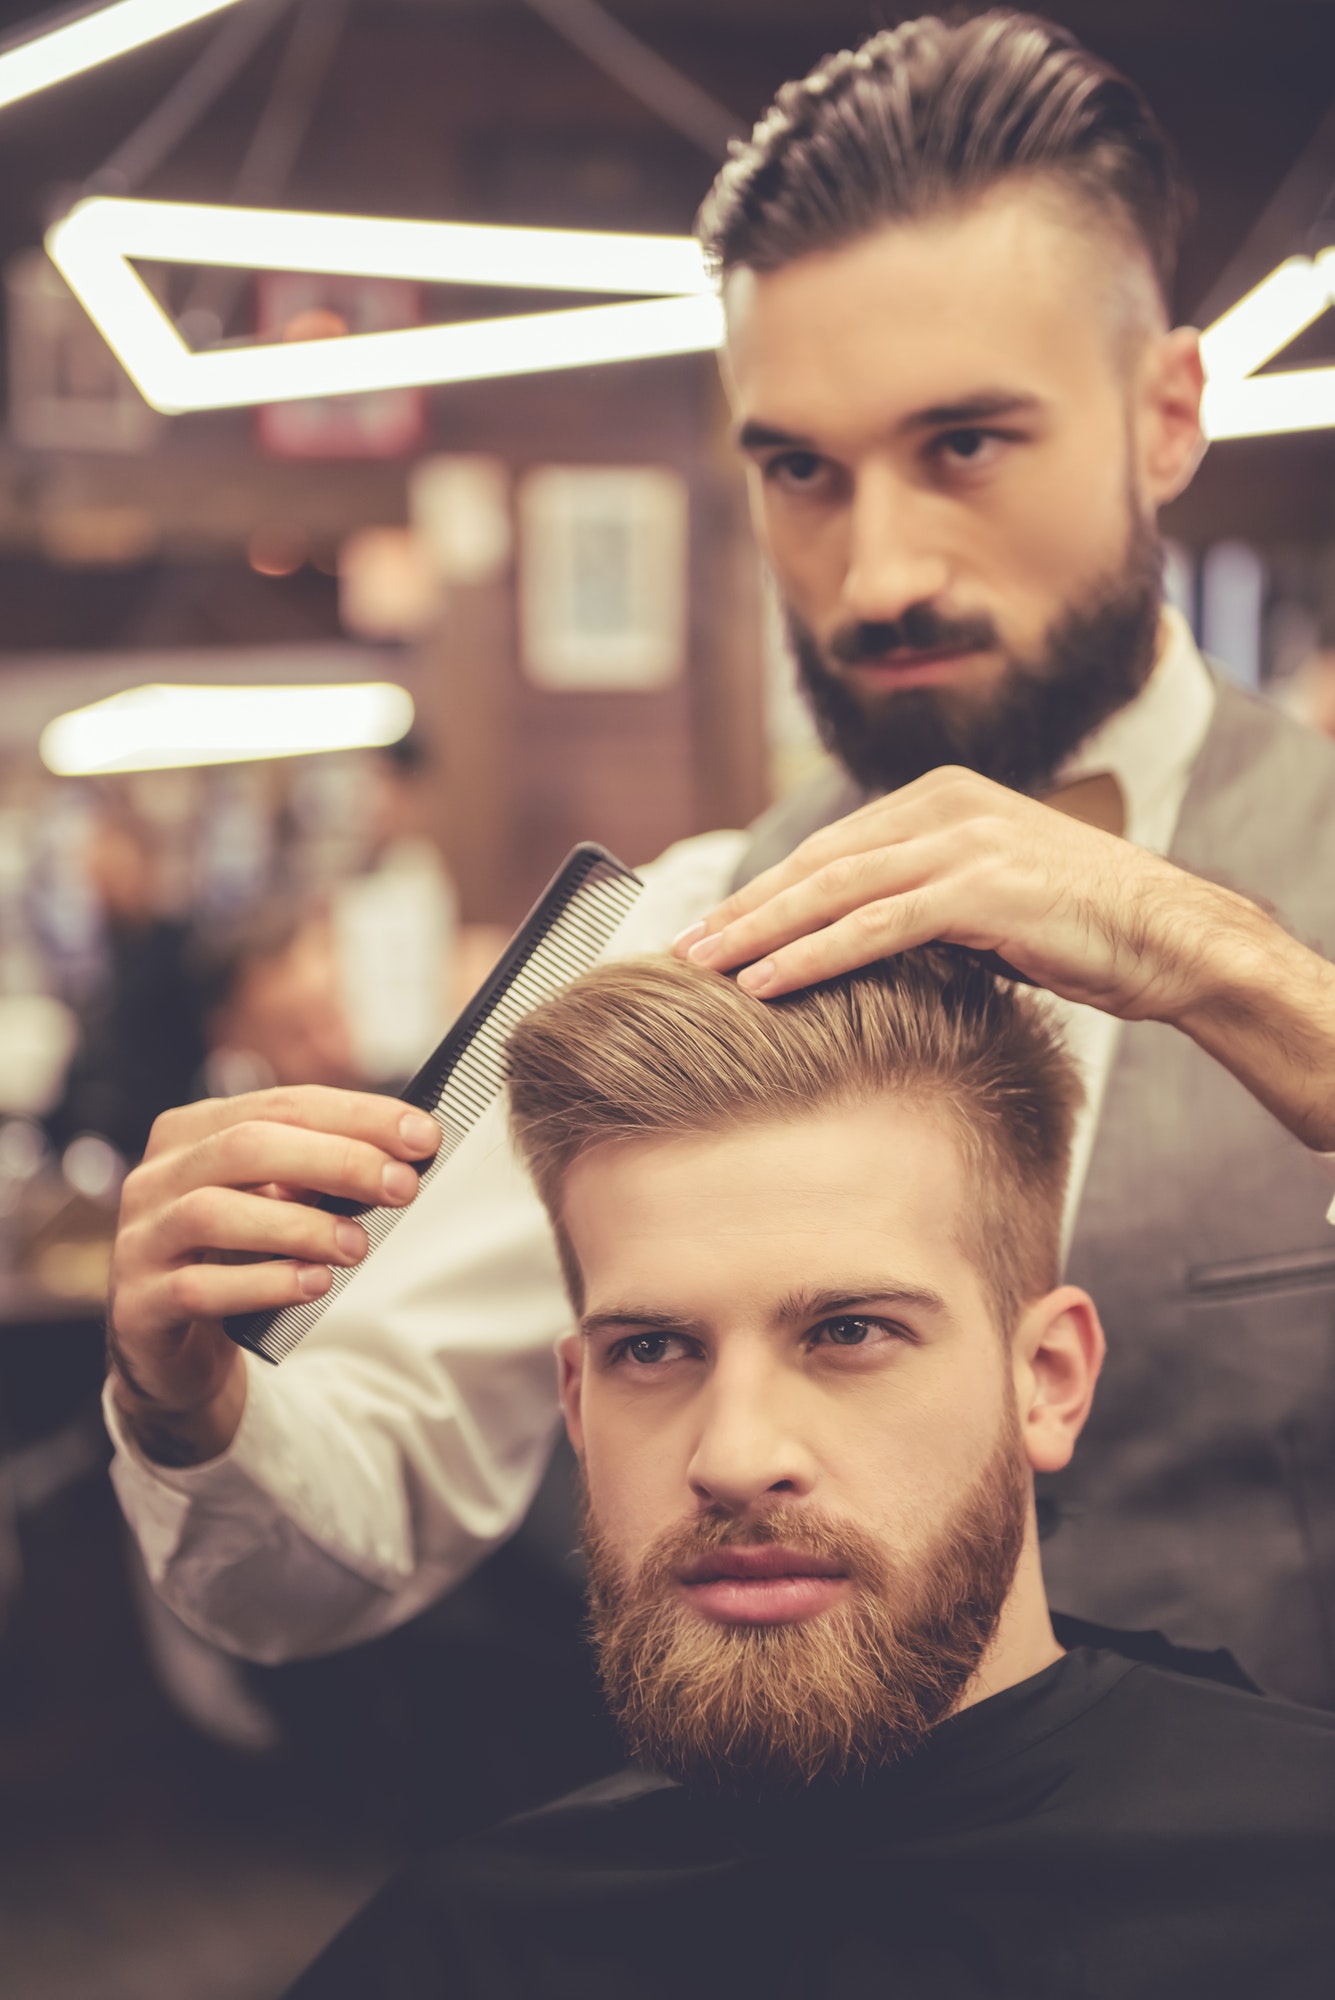 lassic Hi-Top Fade haircuts for men